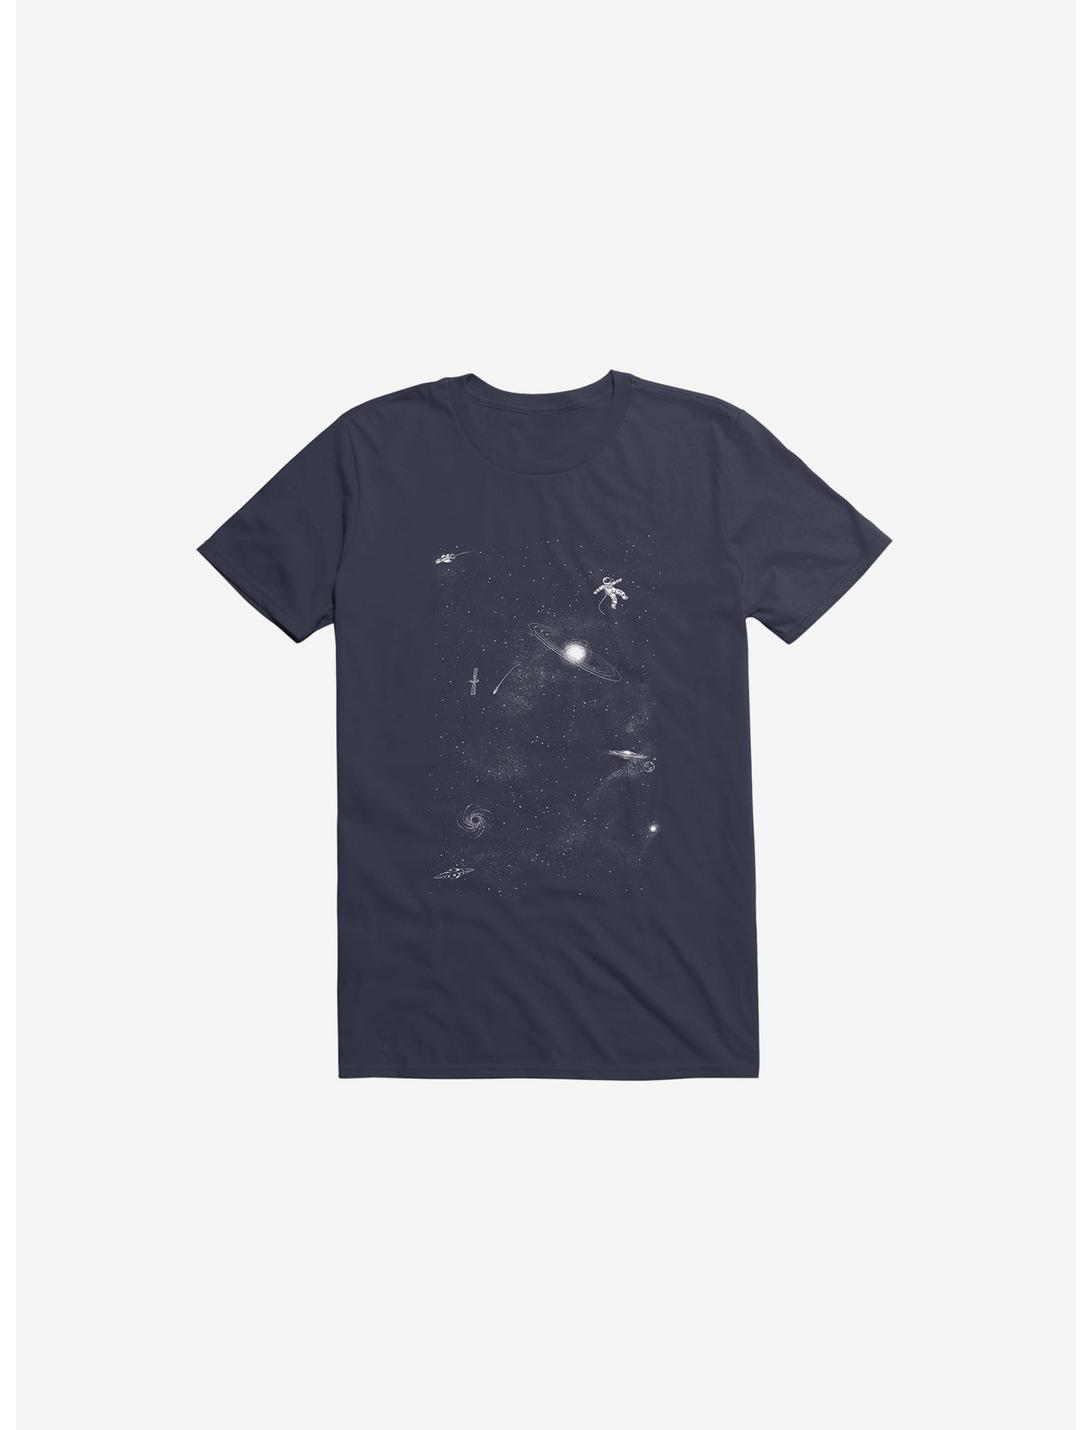 Gravity 3.0 Astronaut Navy Blue T-Shirt, NAVY, hi-res